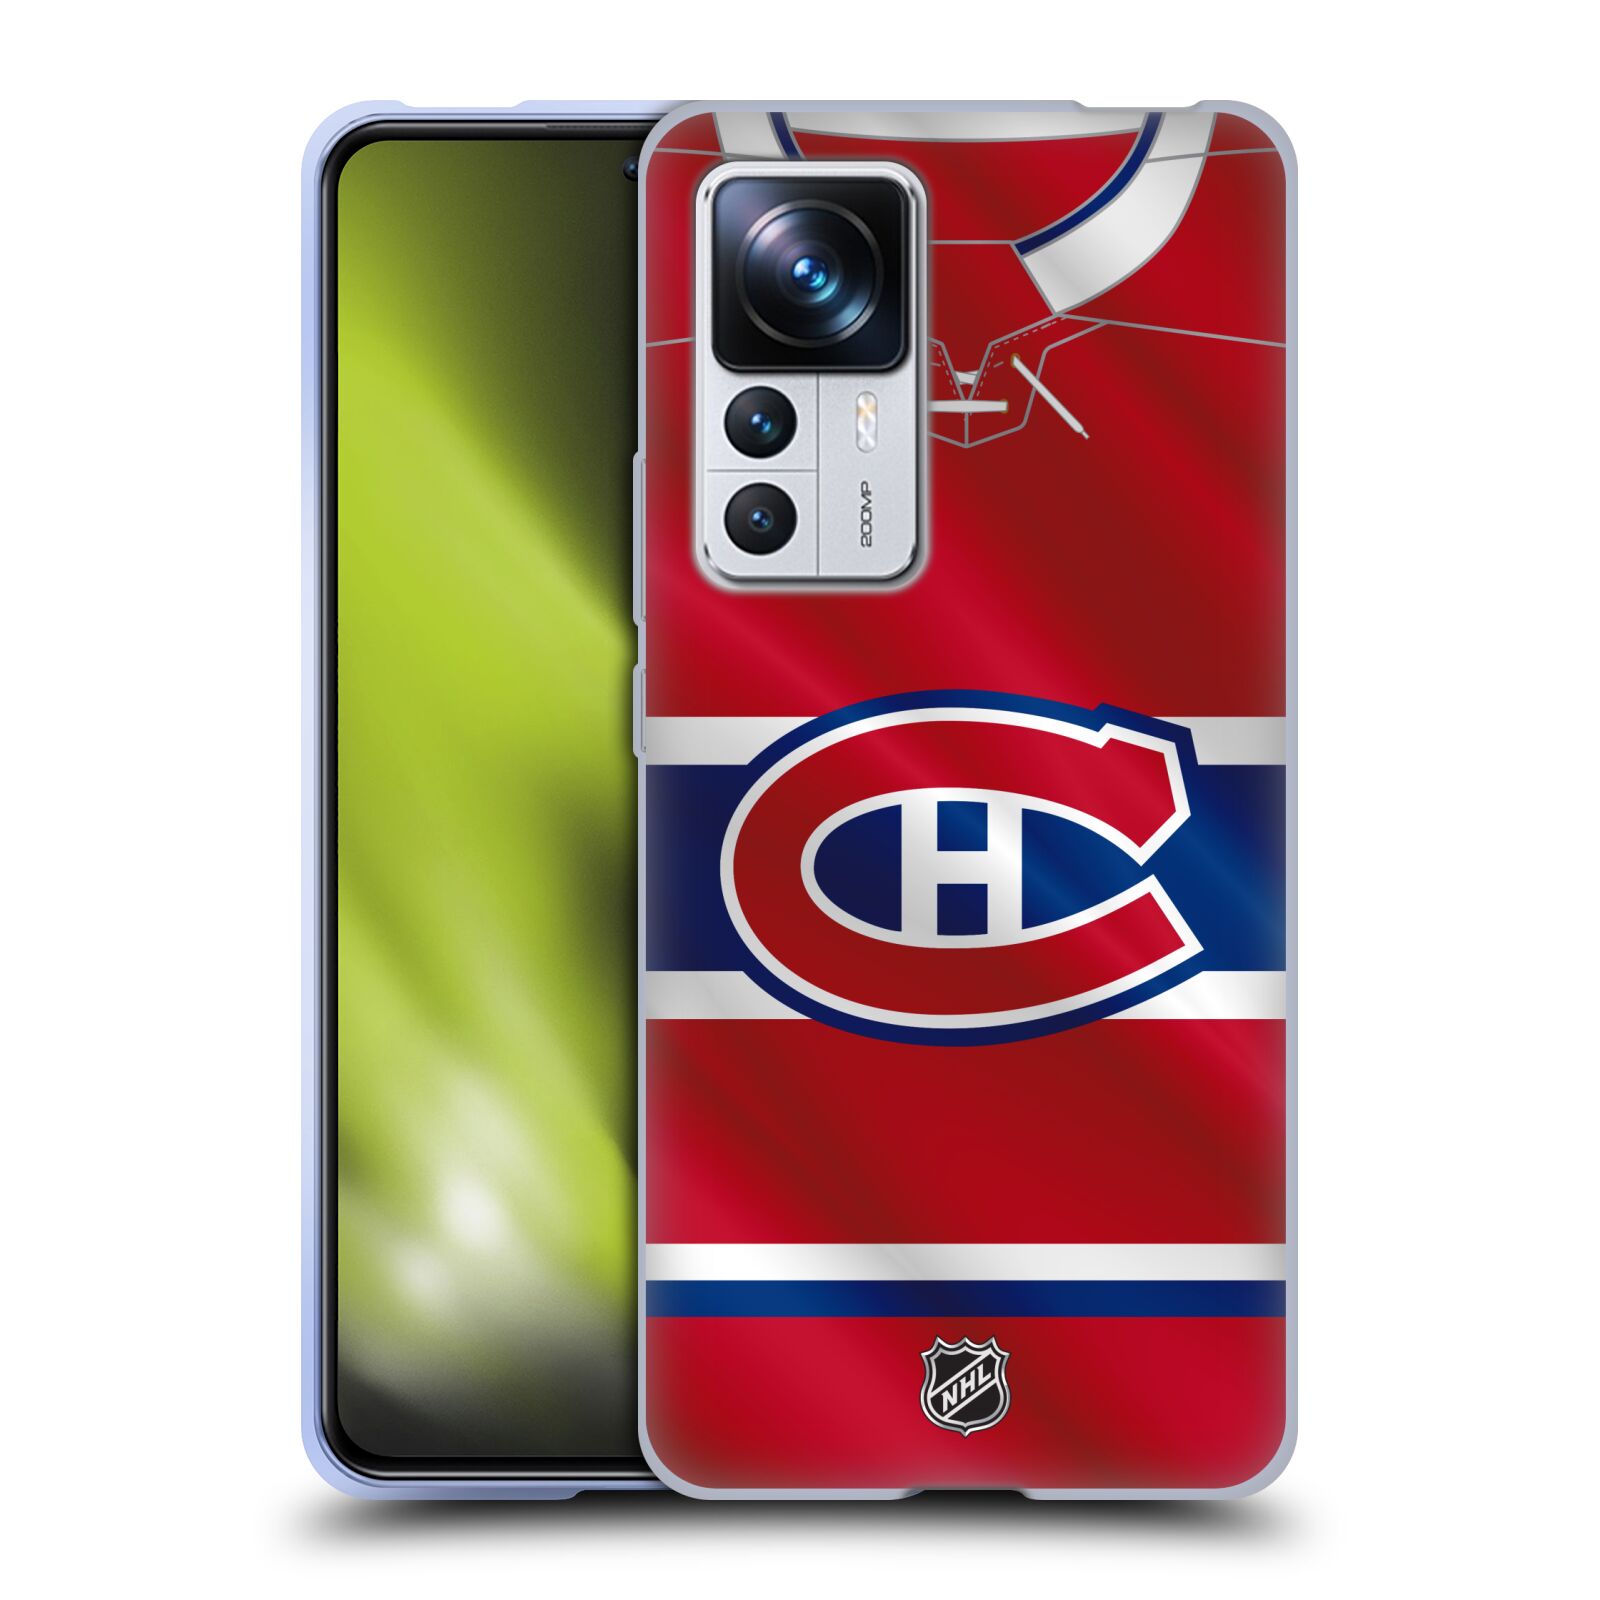 Silikonové pouzdro na mobil Xiaomi 12T / 12T Pro - NHL - Dres Montreal Canadiens (Silikonový kryt, obal, pouzdro na mobilní telefon Xiaomi 12T / 12T Pro s licencovaným motivem NHL - Dres Montreal Canadiens)